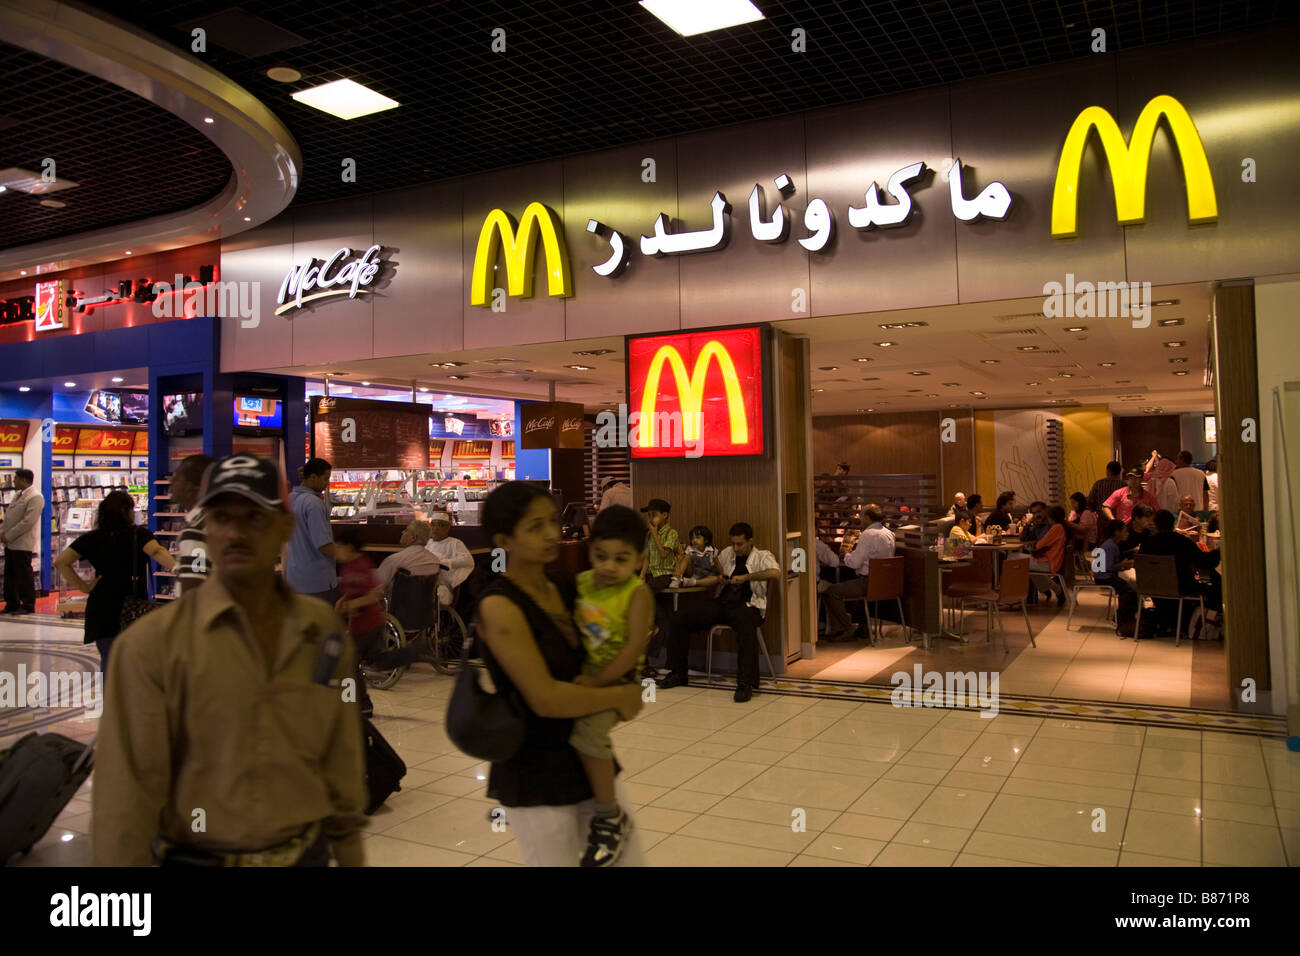 Restaurant McDonald's dans la salle d'embarquement de l'aéroport international de Bahreïn. Banque D'Images